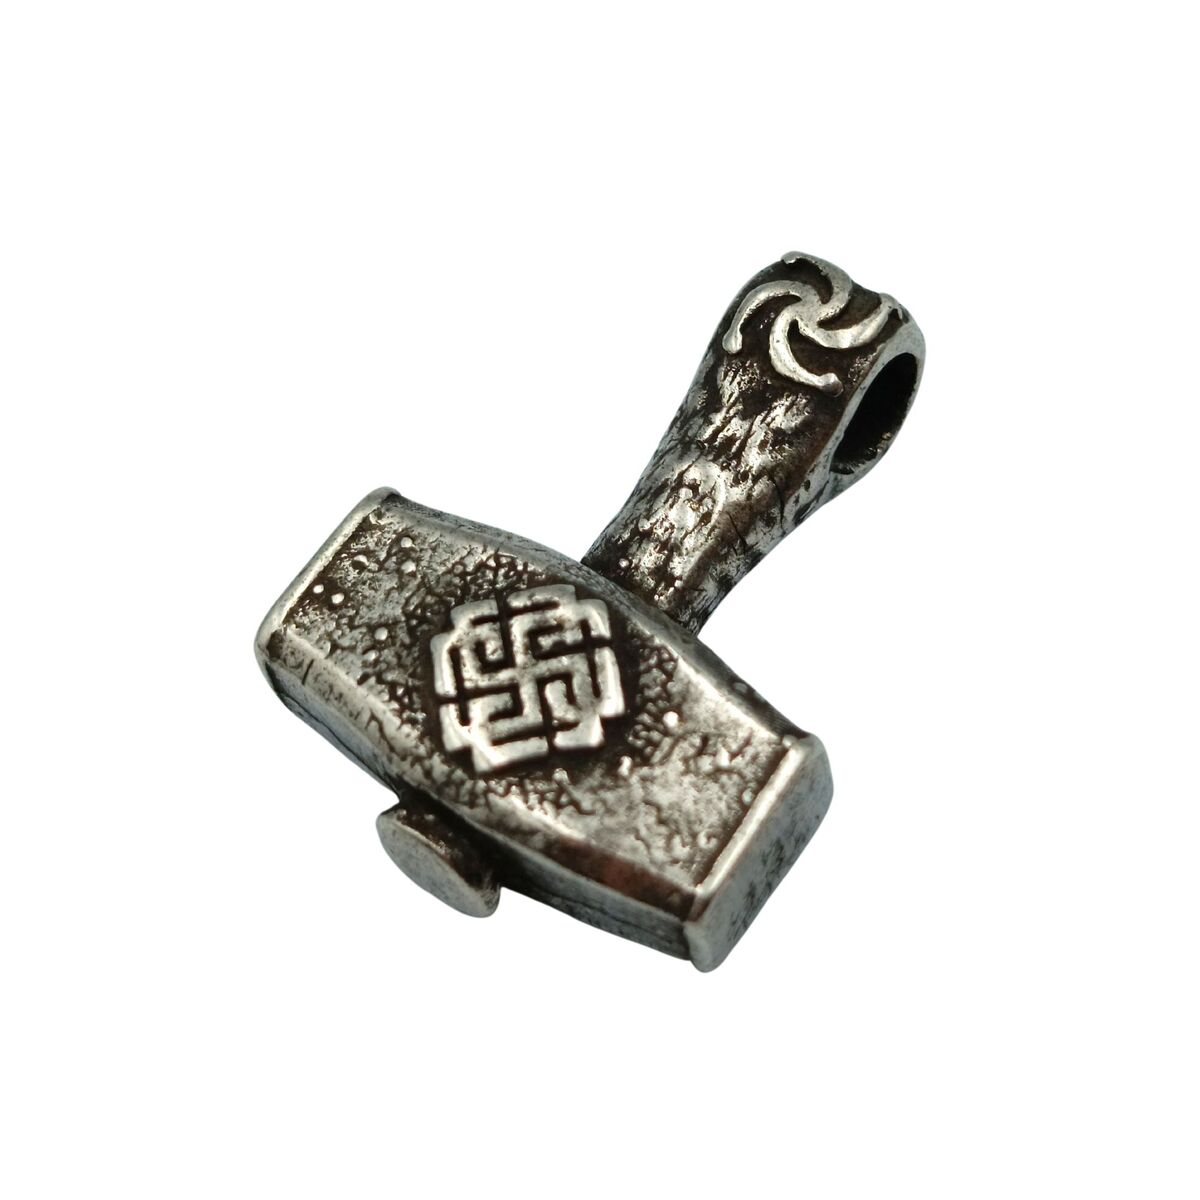 Svarozhich hammer pendant from bronze